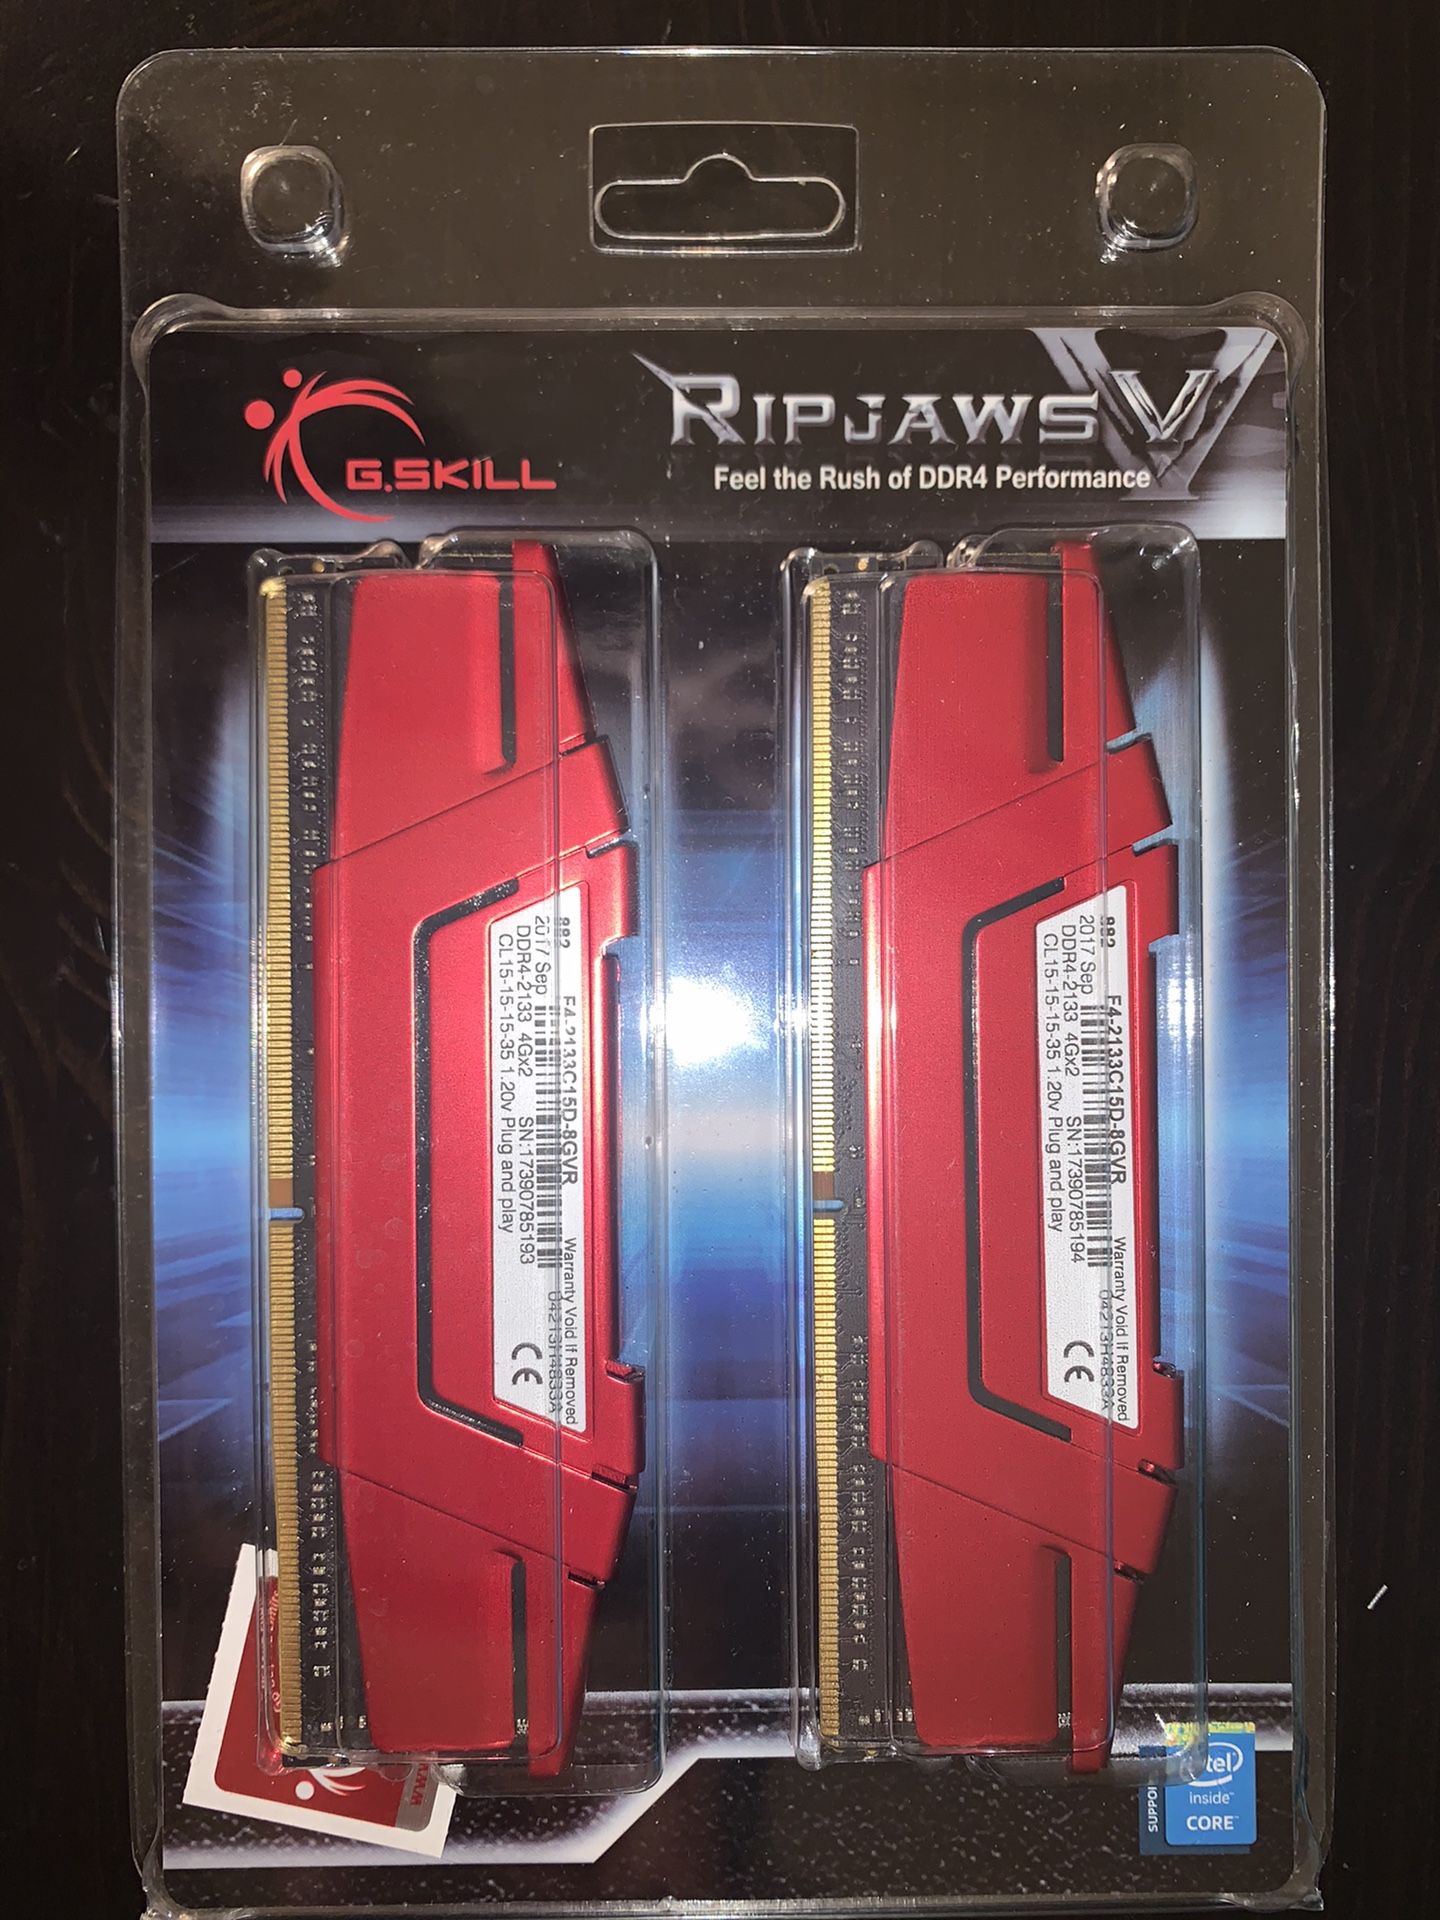 RIPJAWS V G.SKILL DDR4 RAM 8GB (4x2) 2133mhz